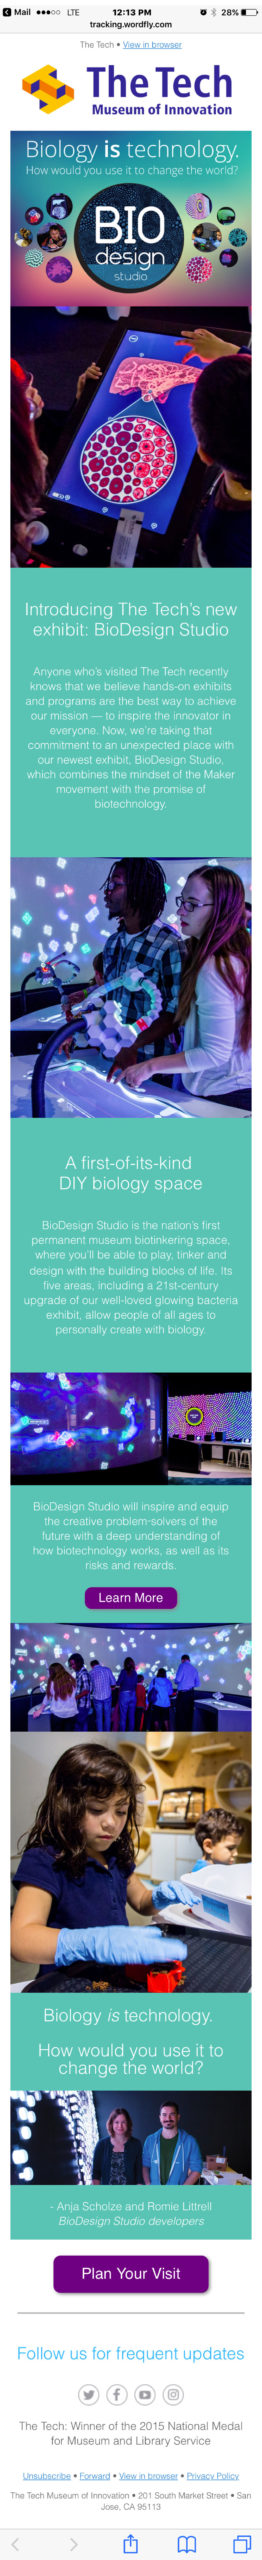 BioDesign exhibit branding and announcement